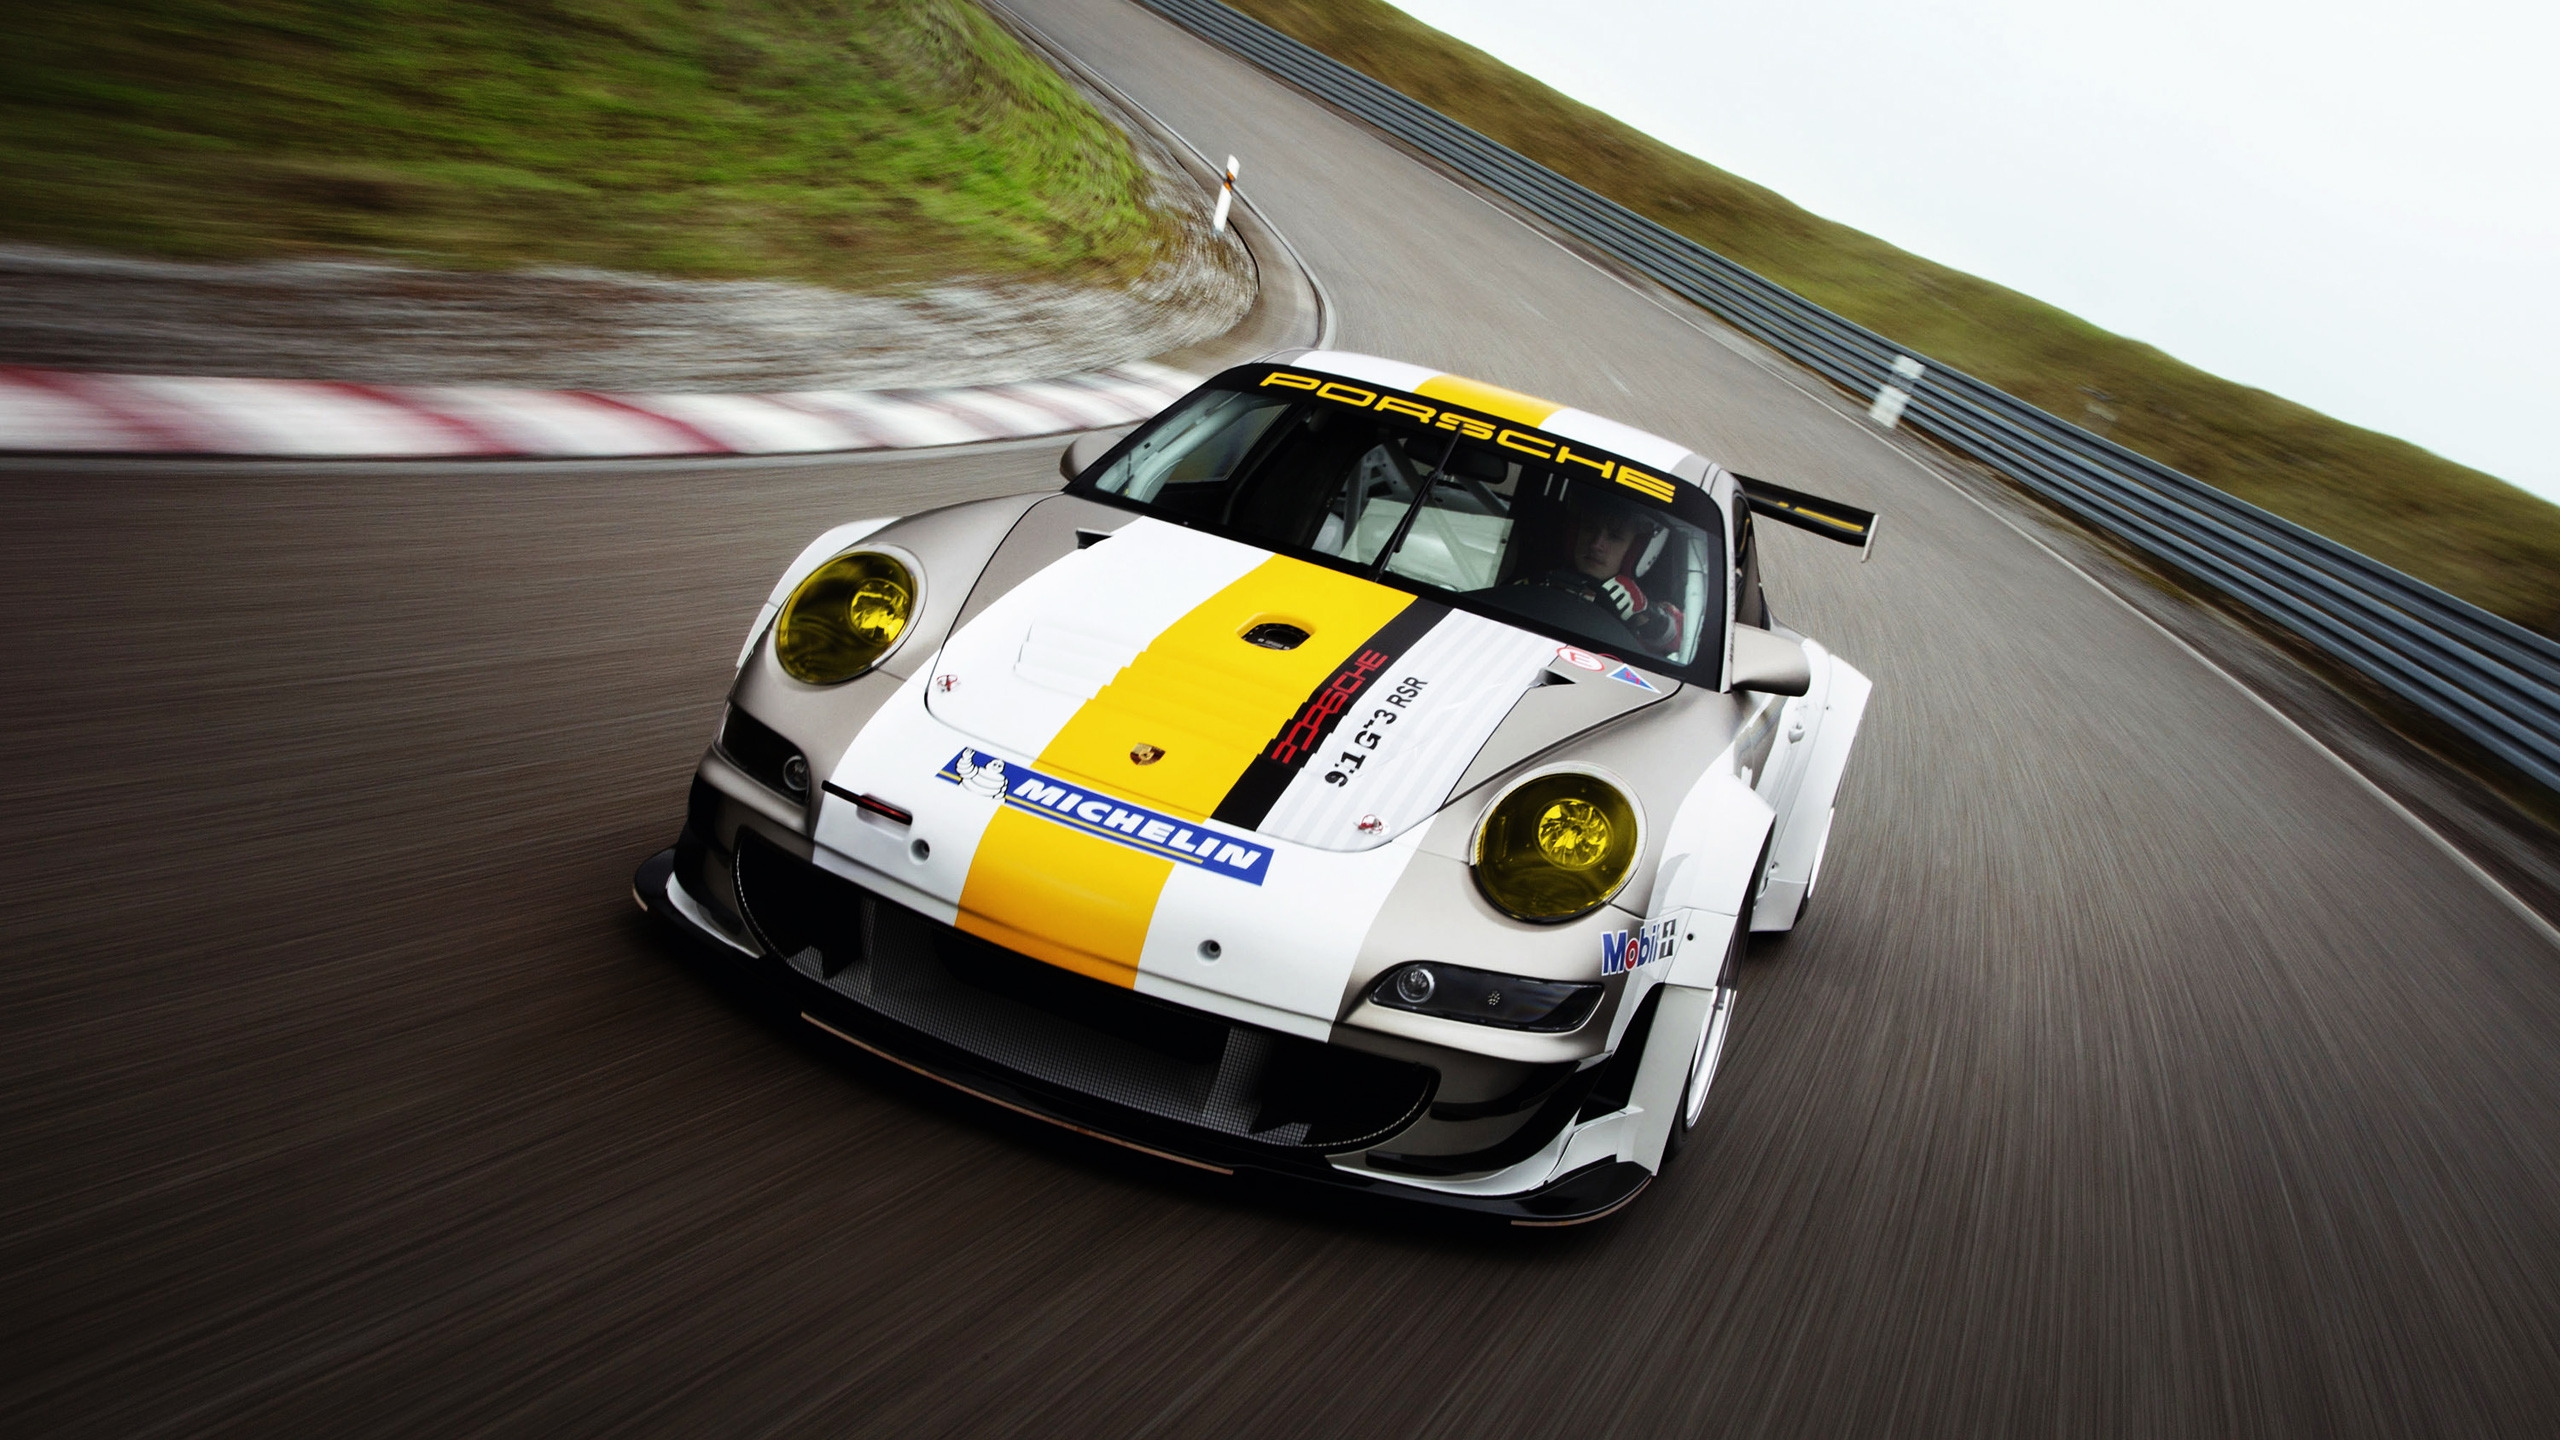 Porsche 911 GT3 RSR for 2560x1440 HDTV resolution